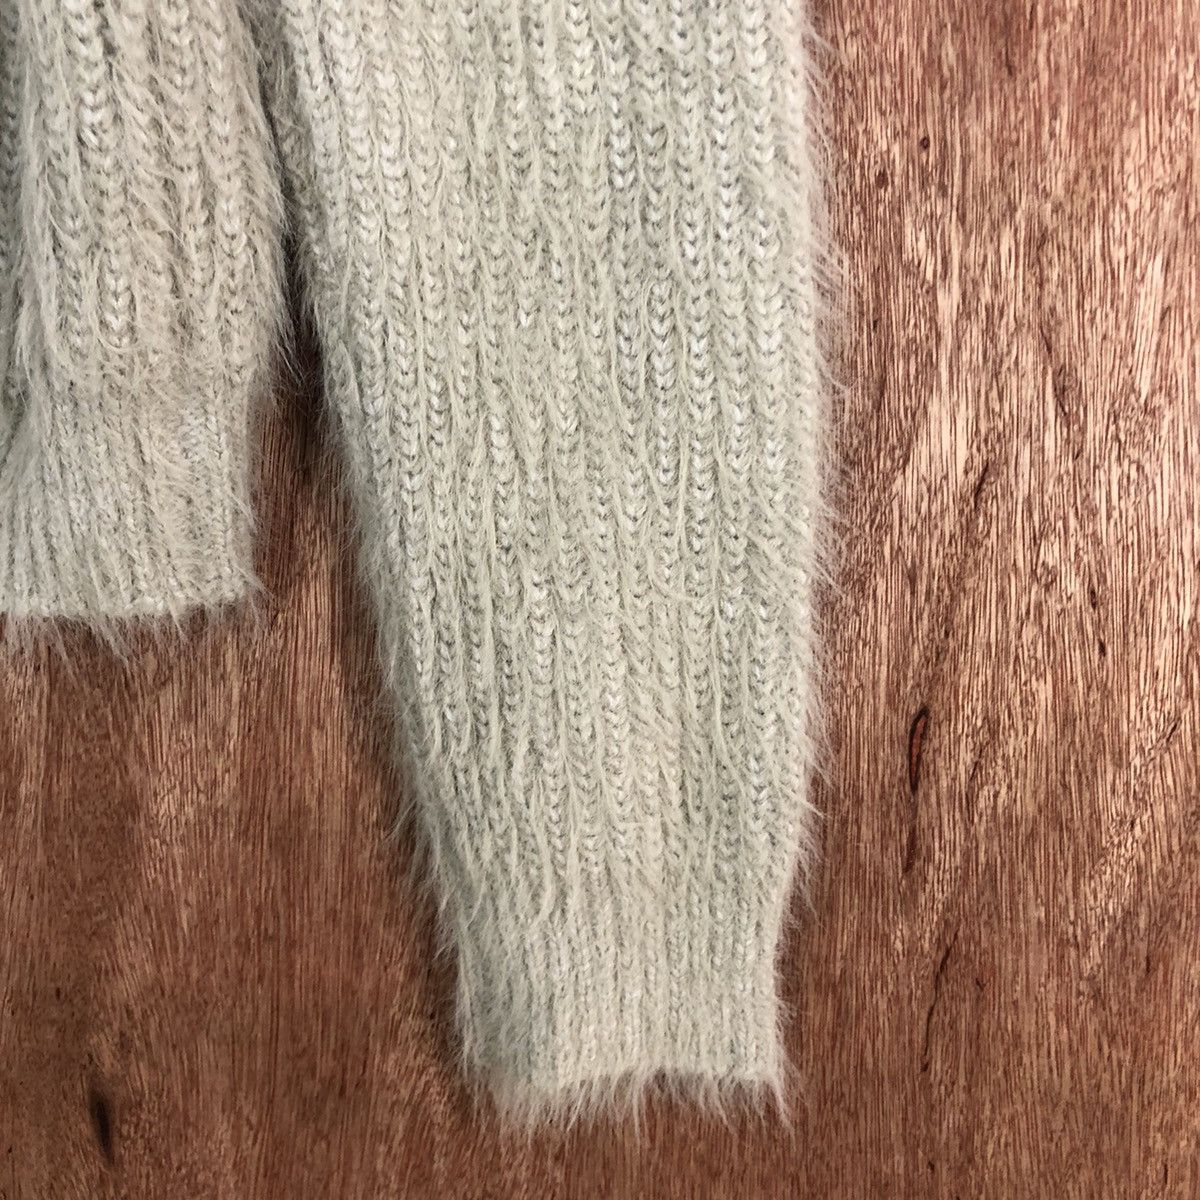 Homespun Knitwear Turtle Neck Mohair Knit Sweater Size US S / EU 44-46 / 1 - 4 Thumbnail